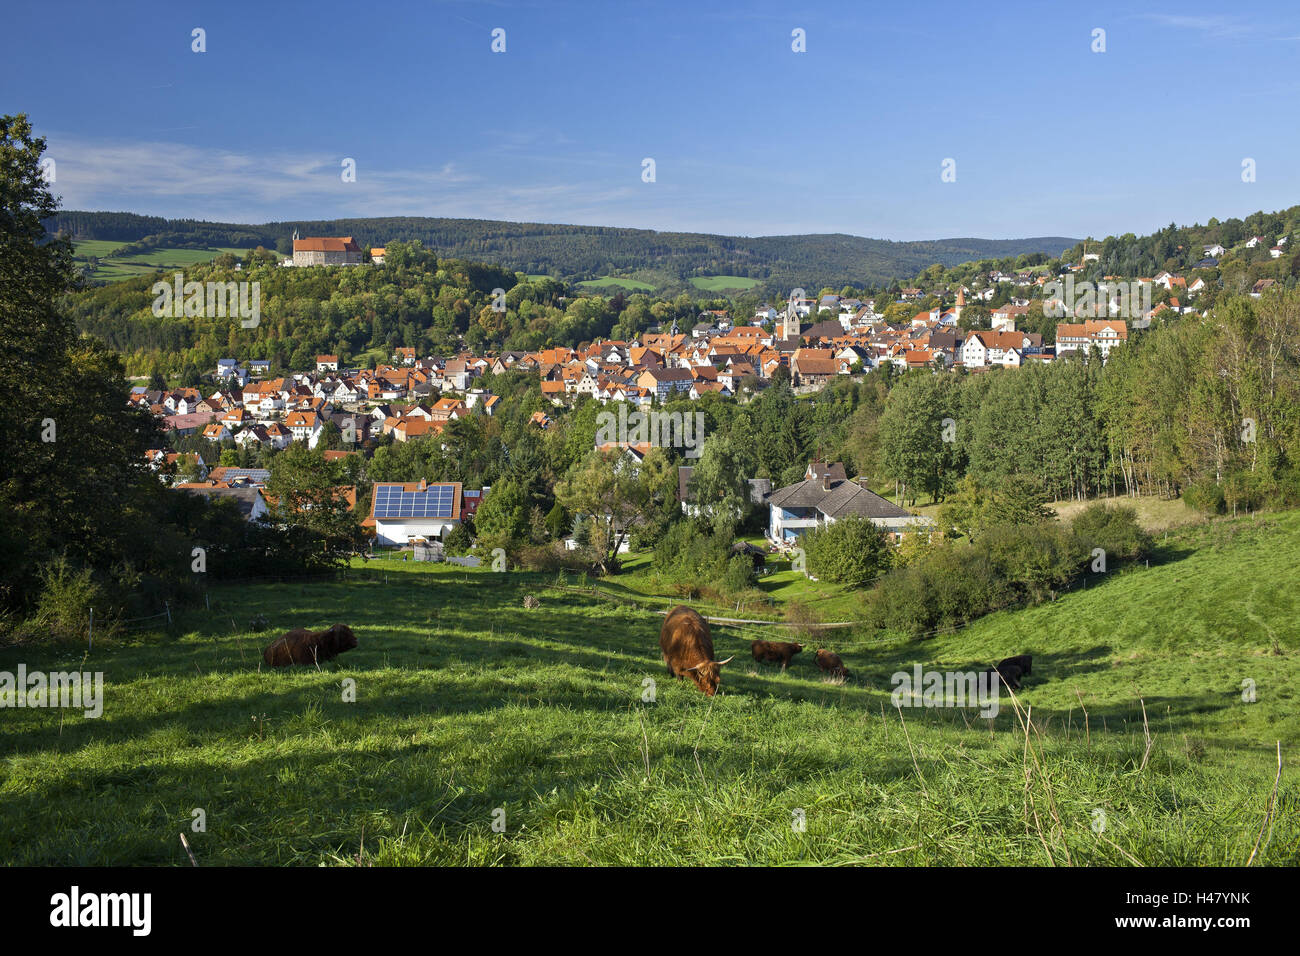 Germany, Hessen, Northern Hessen, Spangenberg, townscape, meadow, cattle, bison herd, grazing, Stock Photo